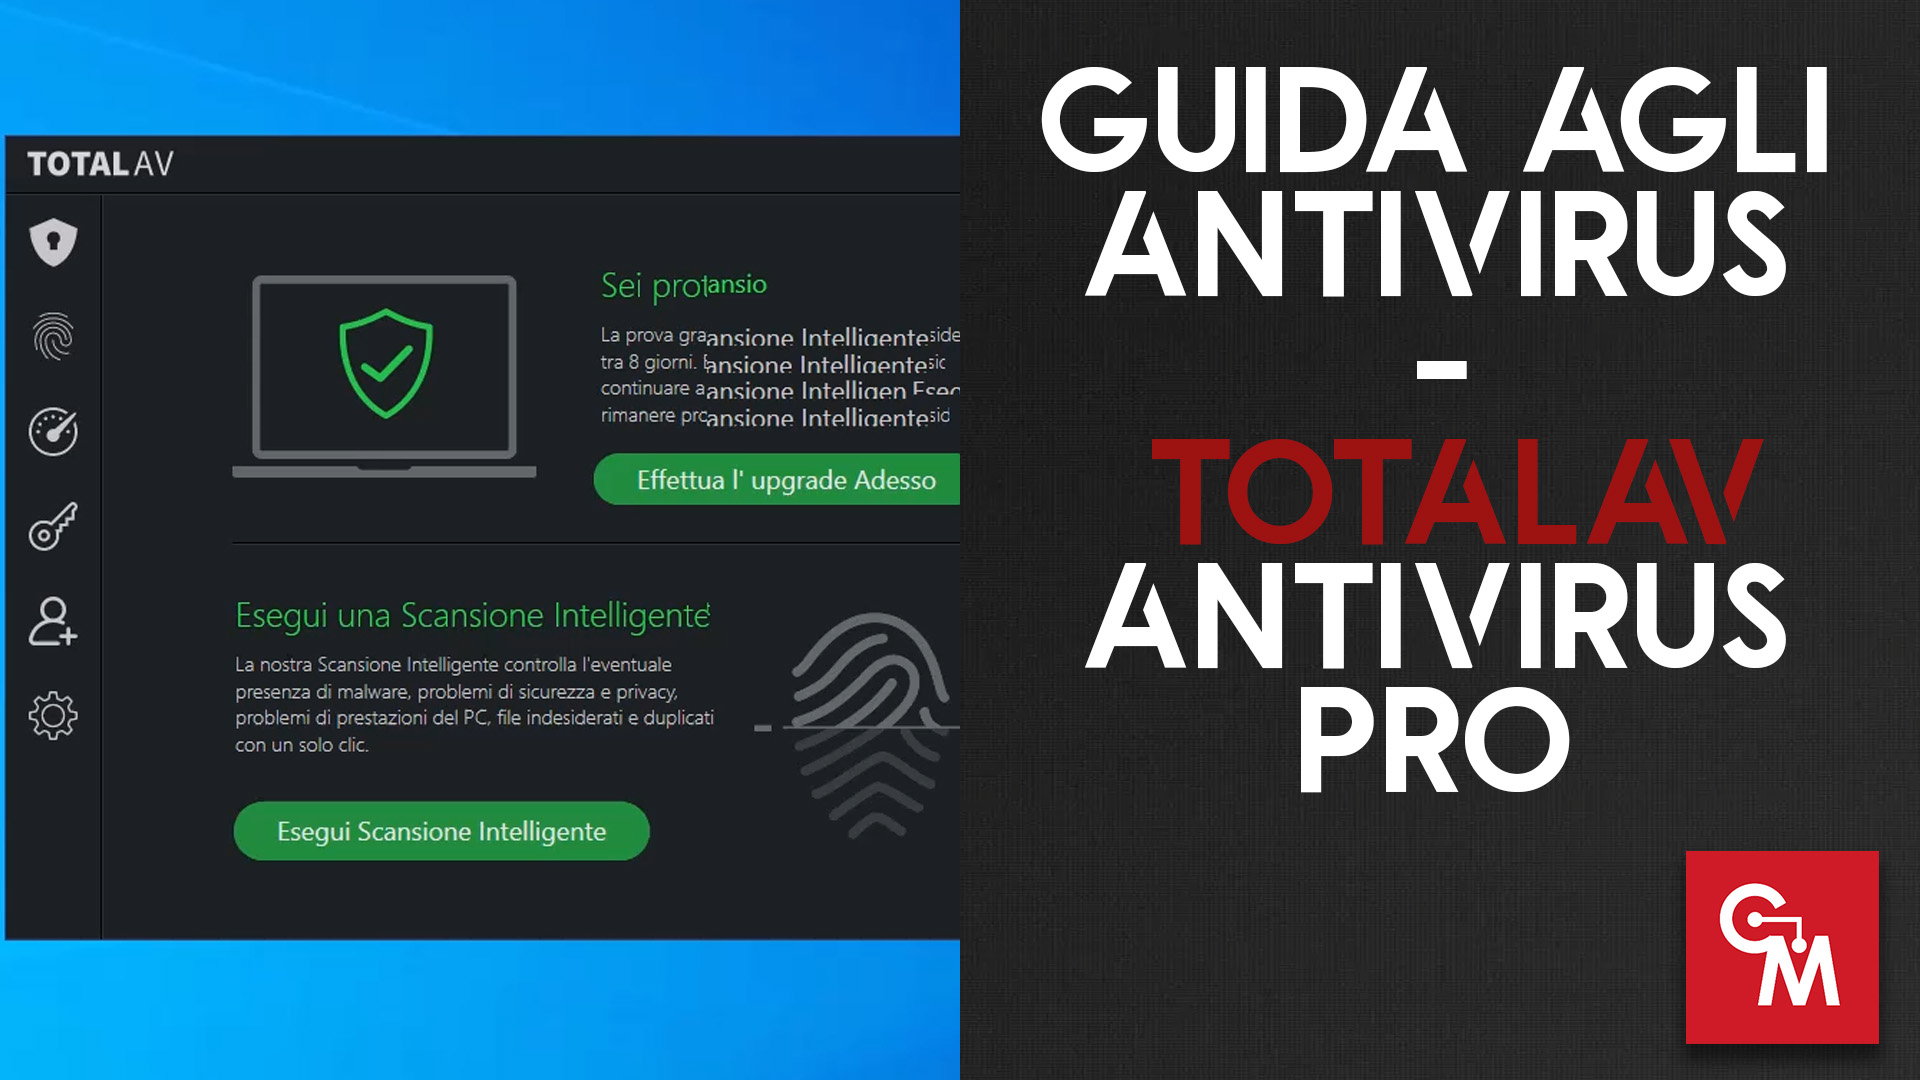 Guida agli Antivirus - TotalAV Antivirus Pro